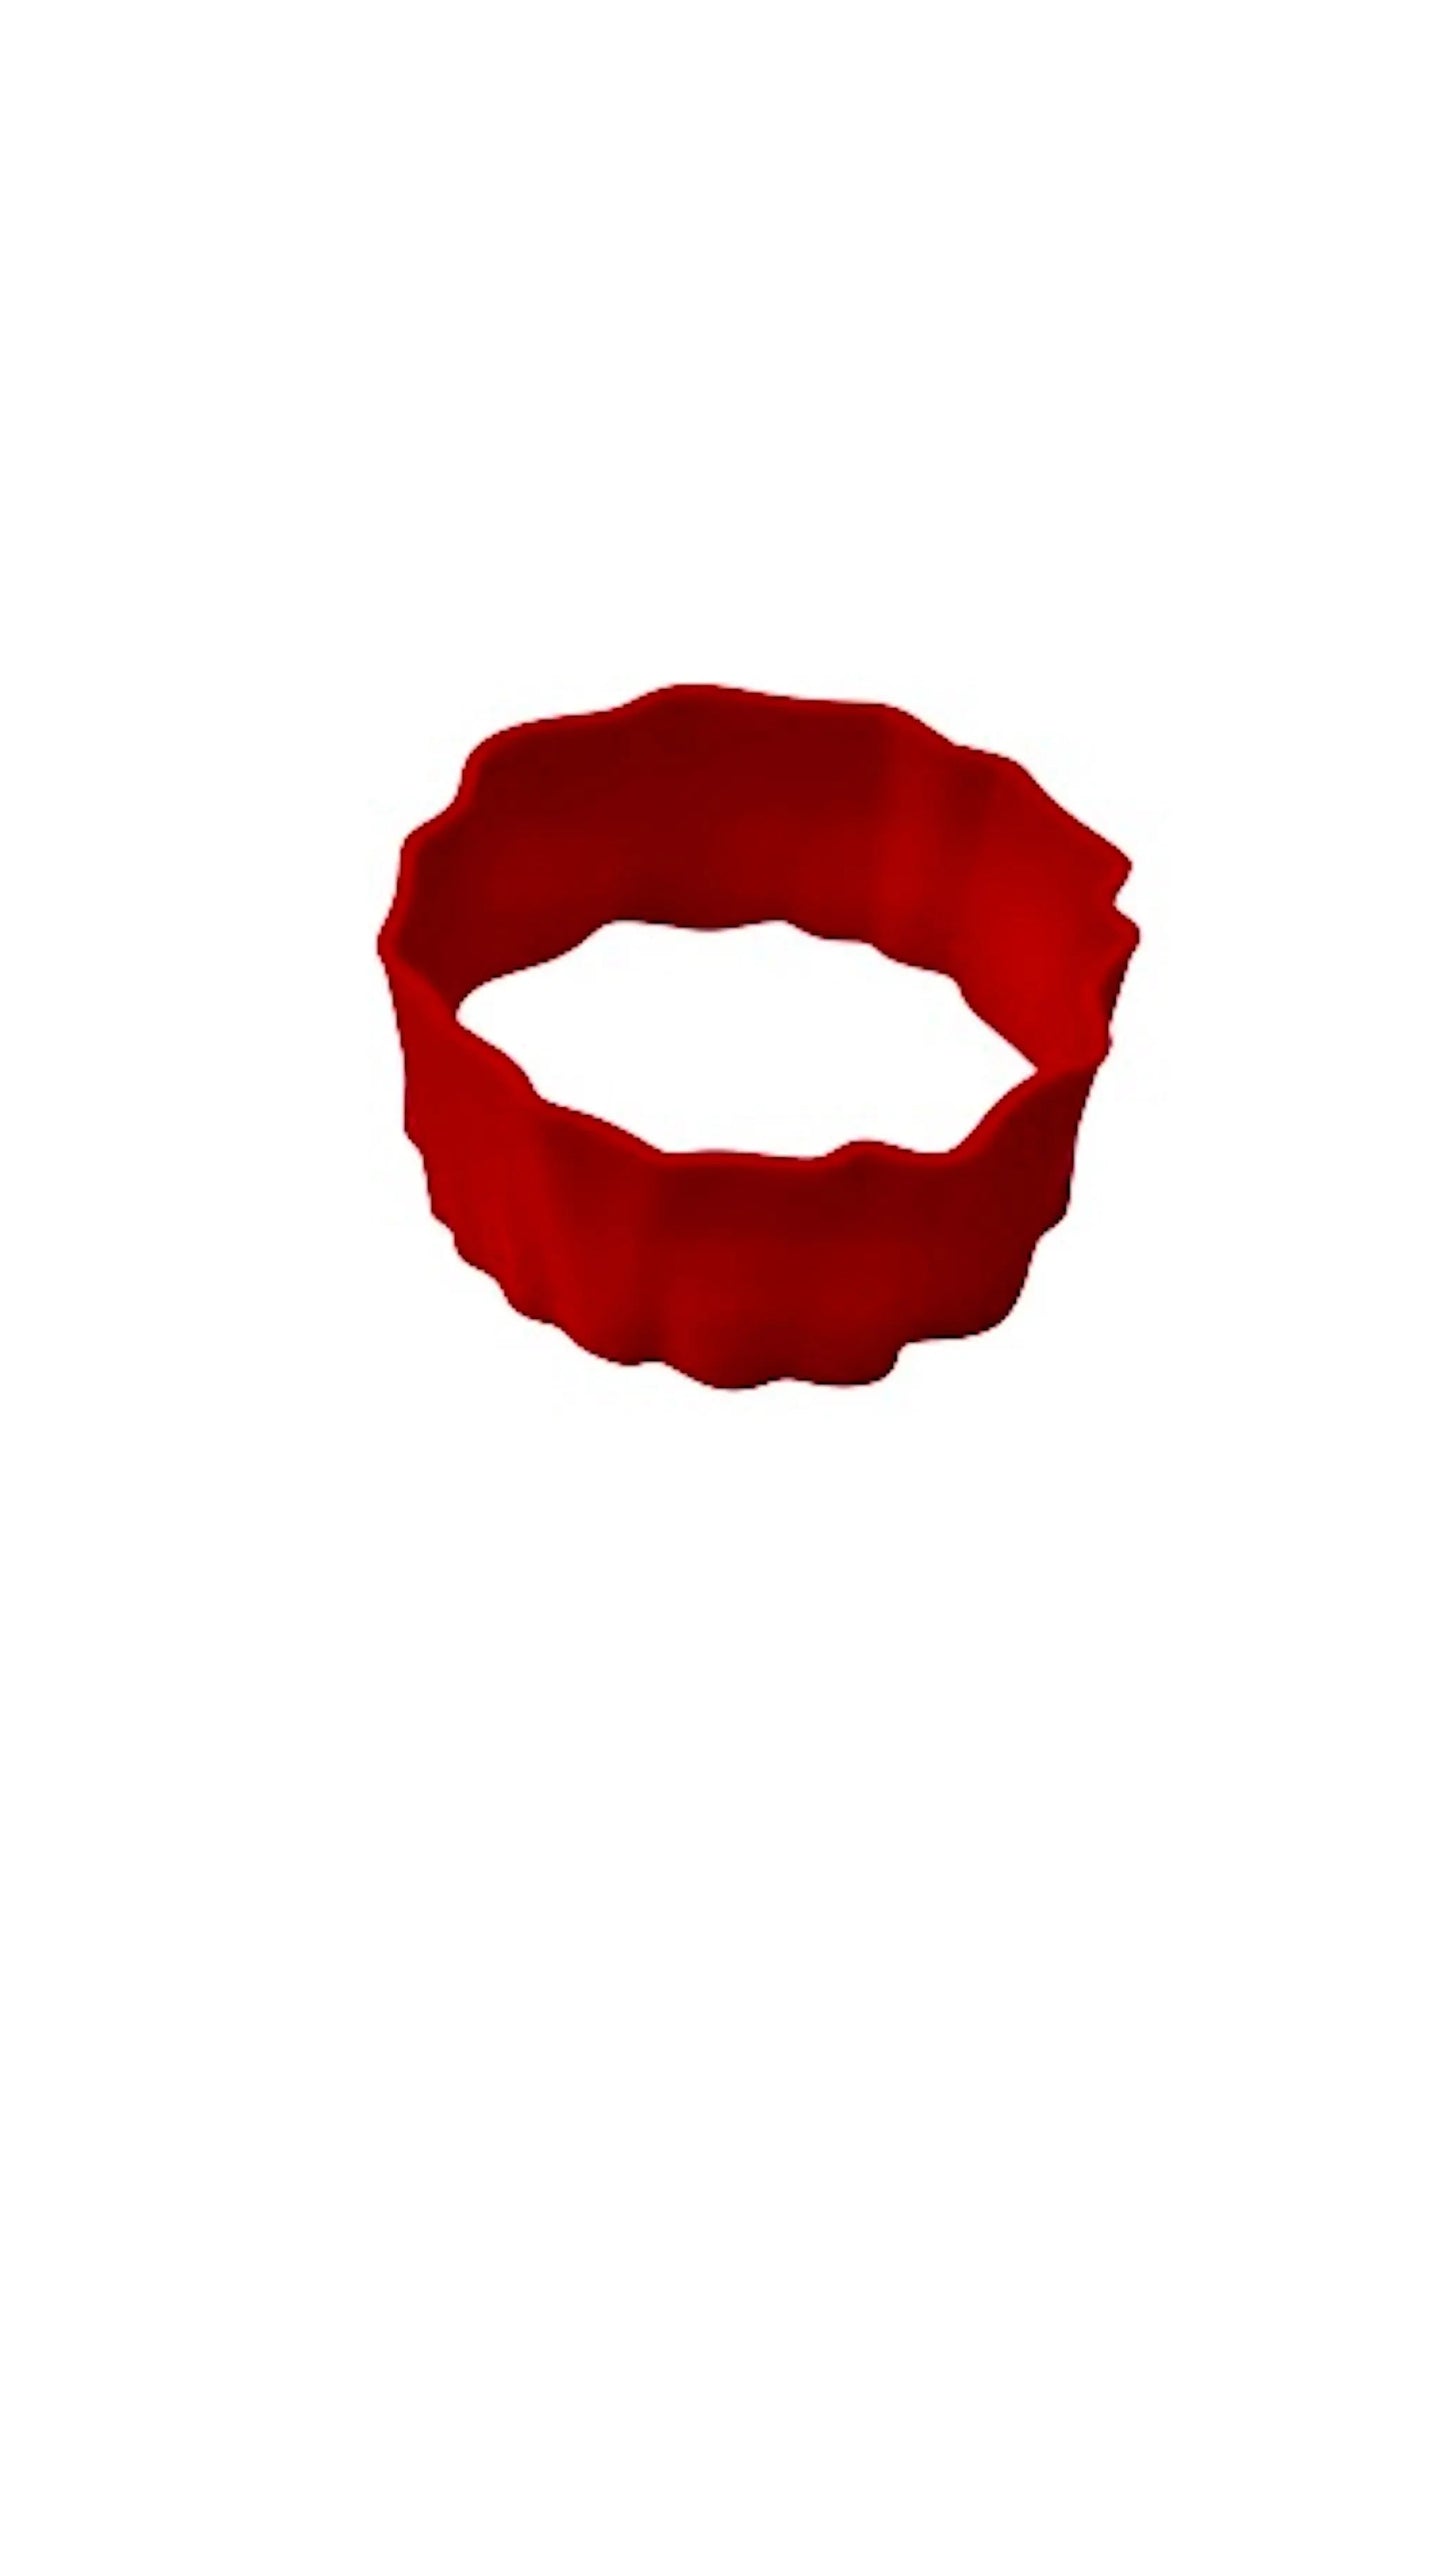 3D Printed Bicep Cuff in Red loveheroldn